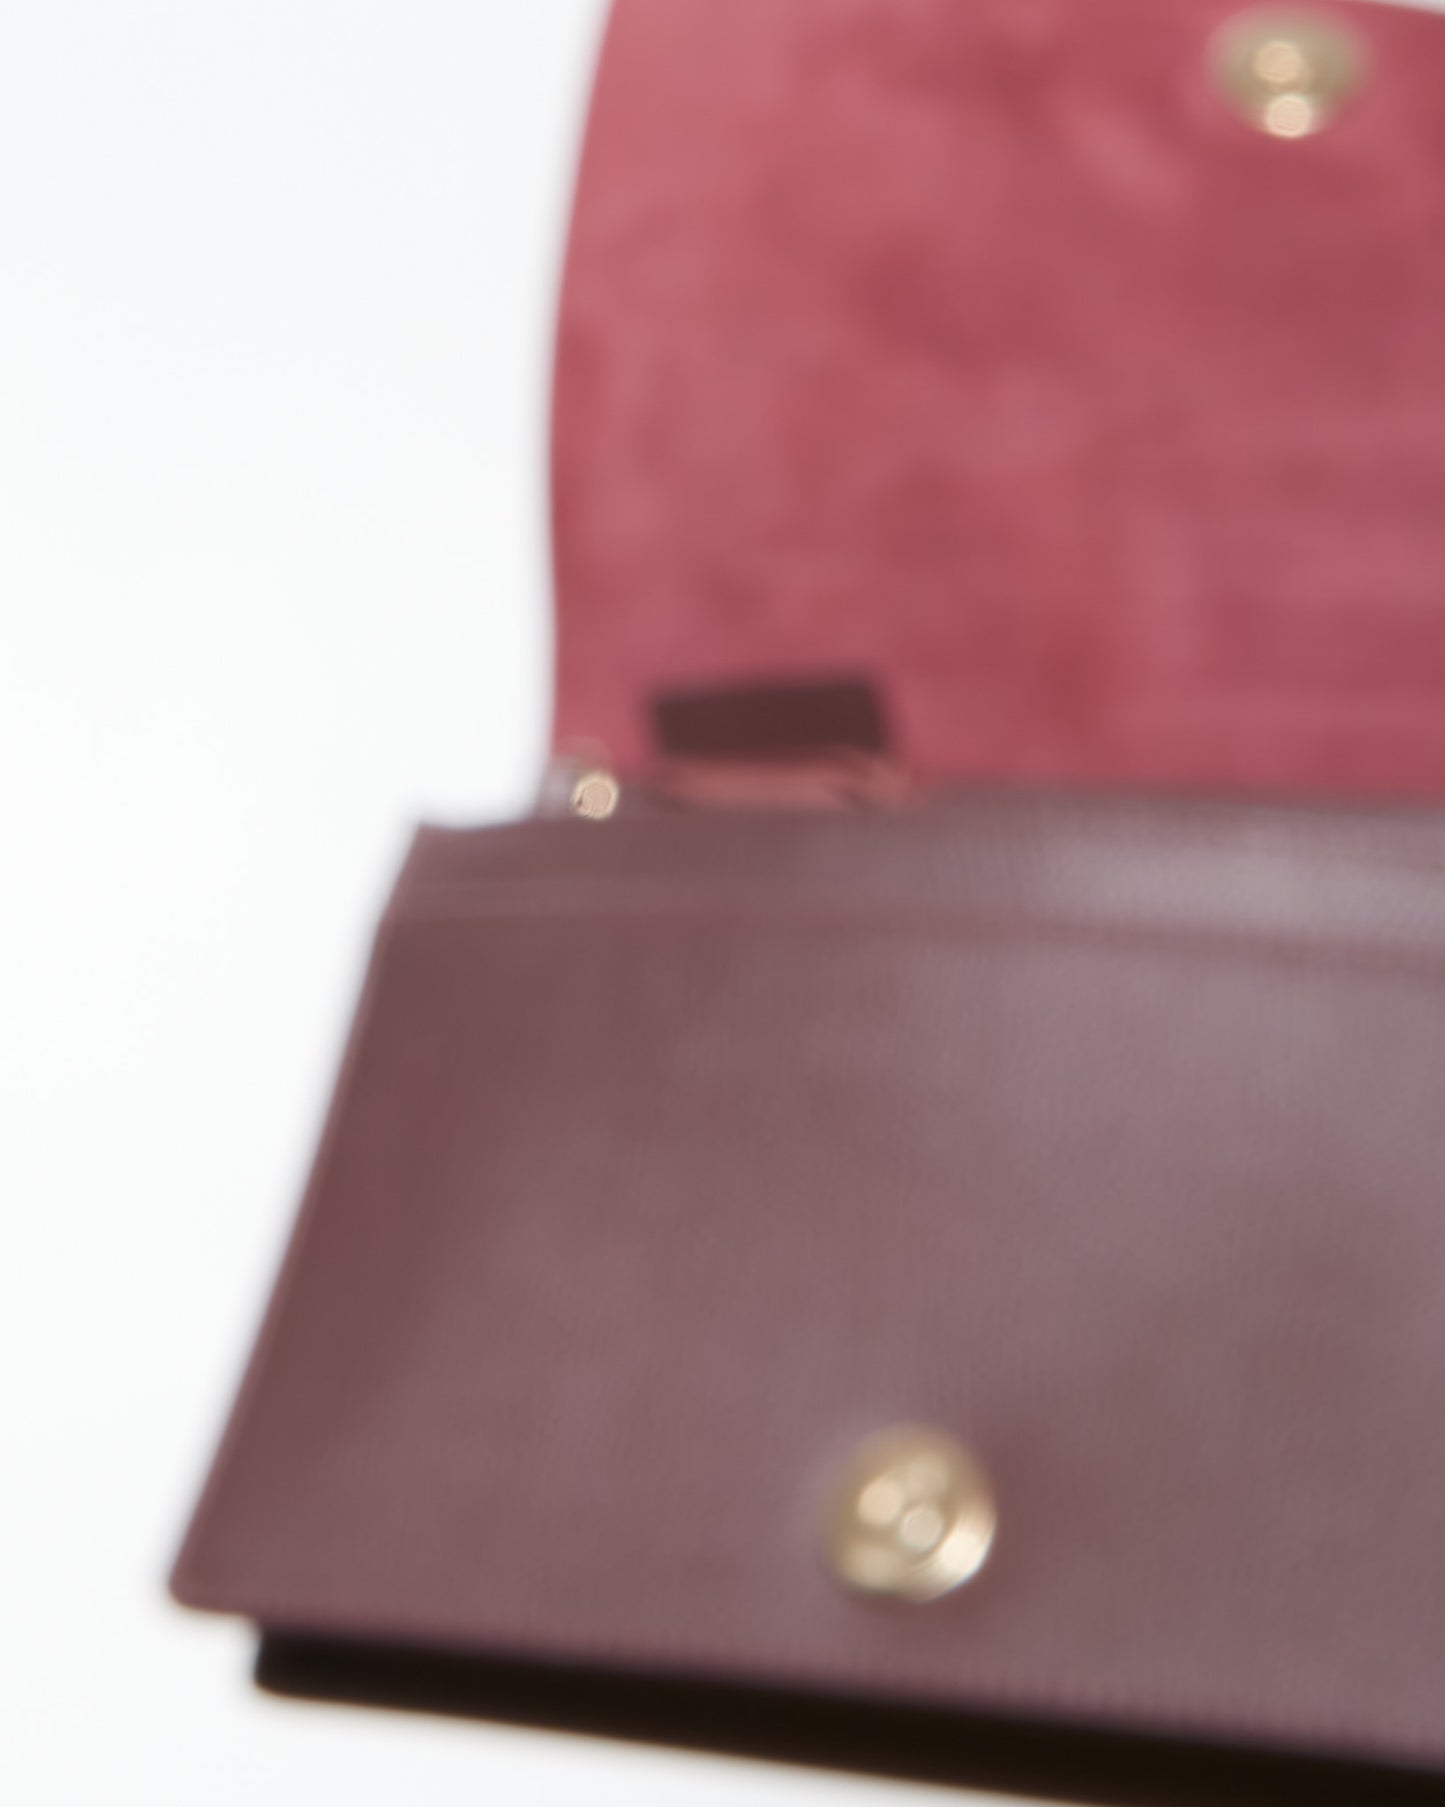 Dior Burgundy Leather Diorama Wallet On Chain Bag